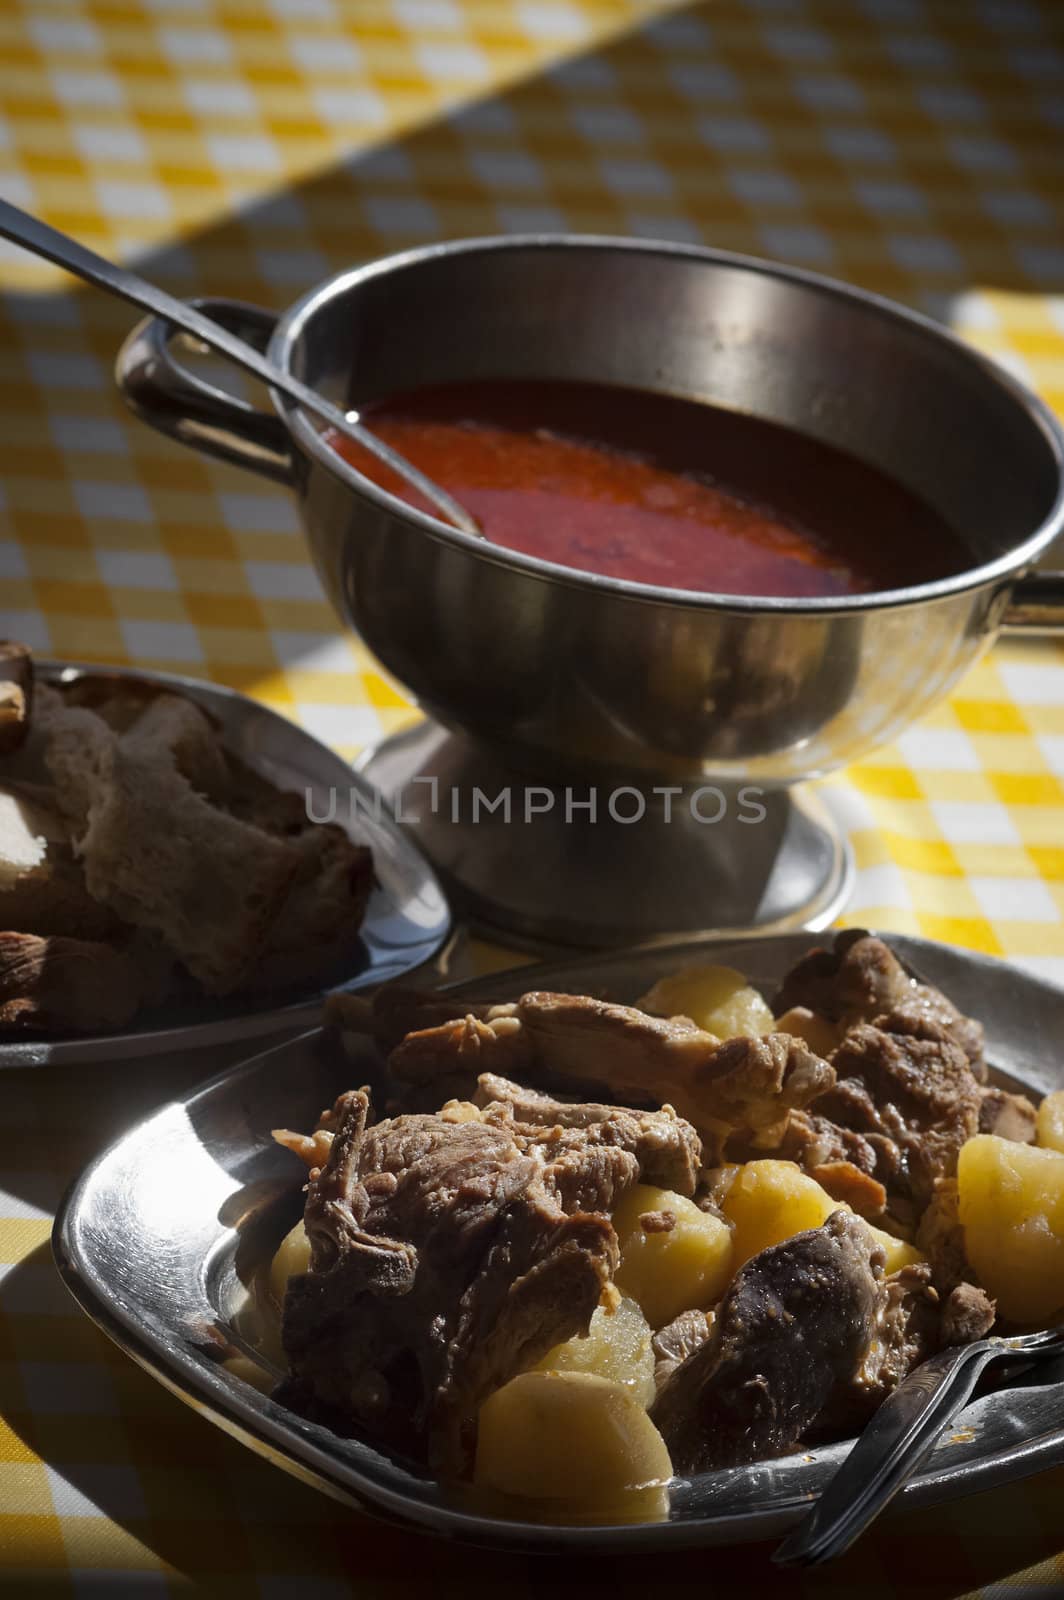 Lamb stew by mrfotos